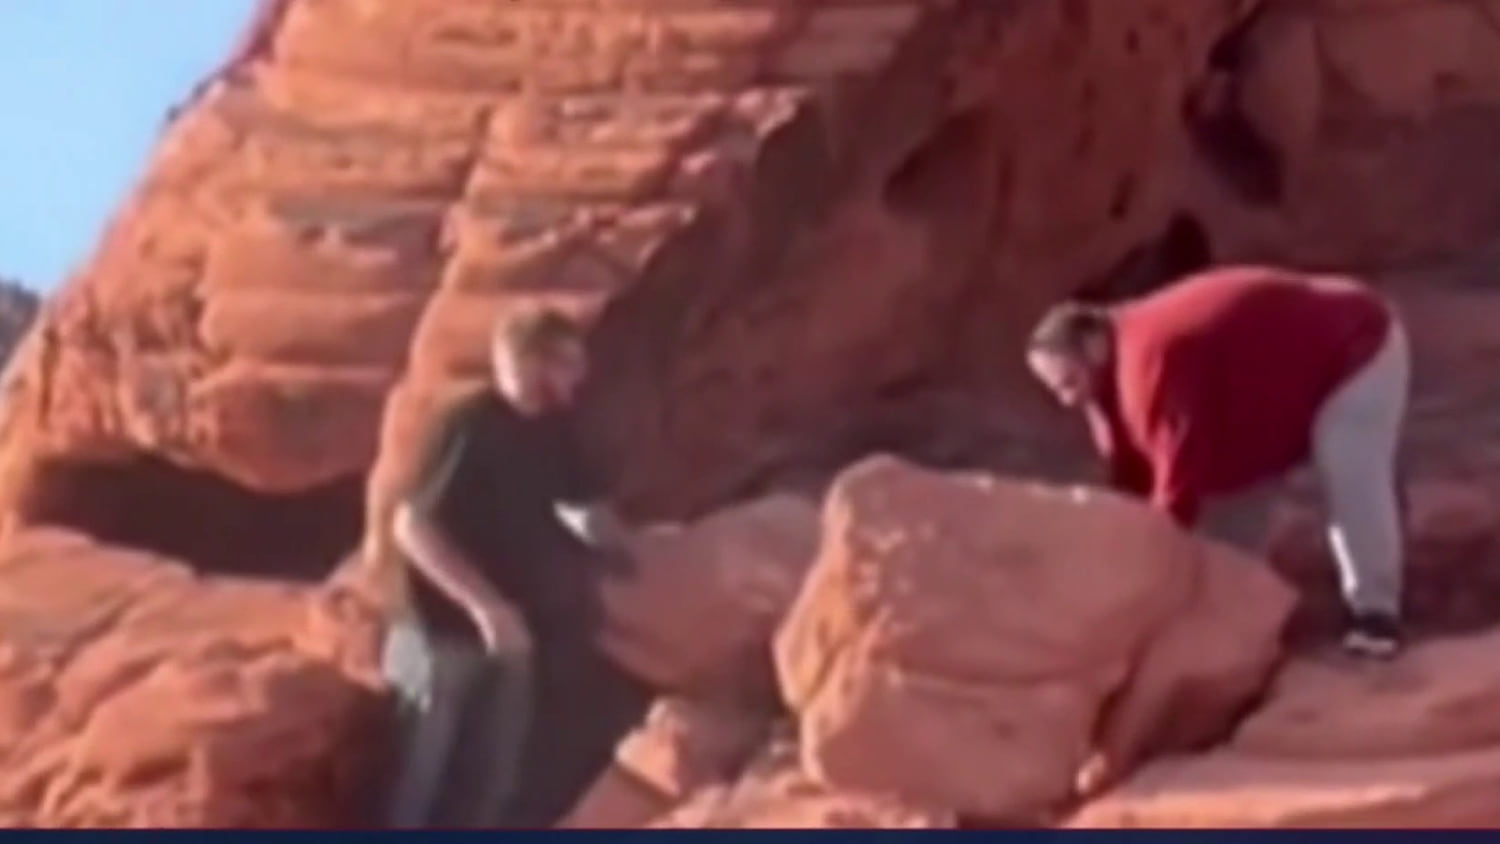 Video shows men damaging ancient rocks in national park